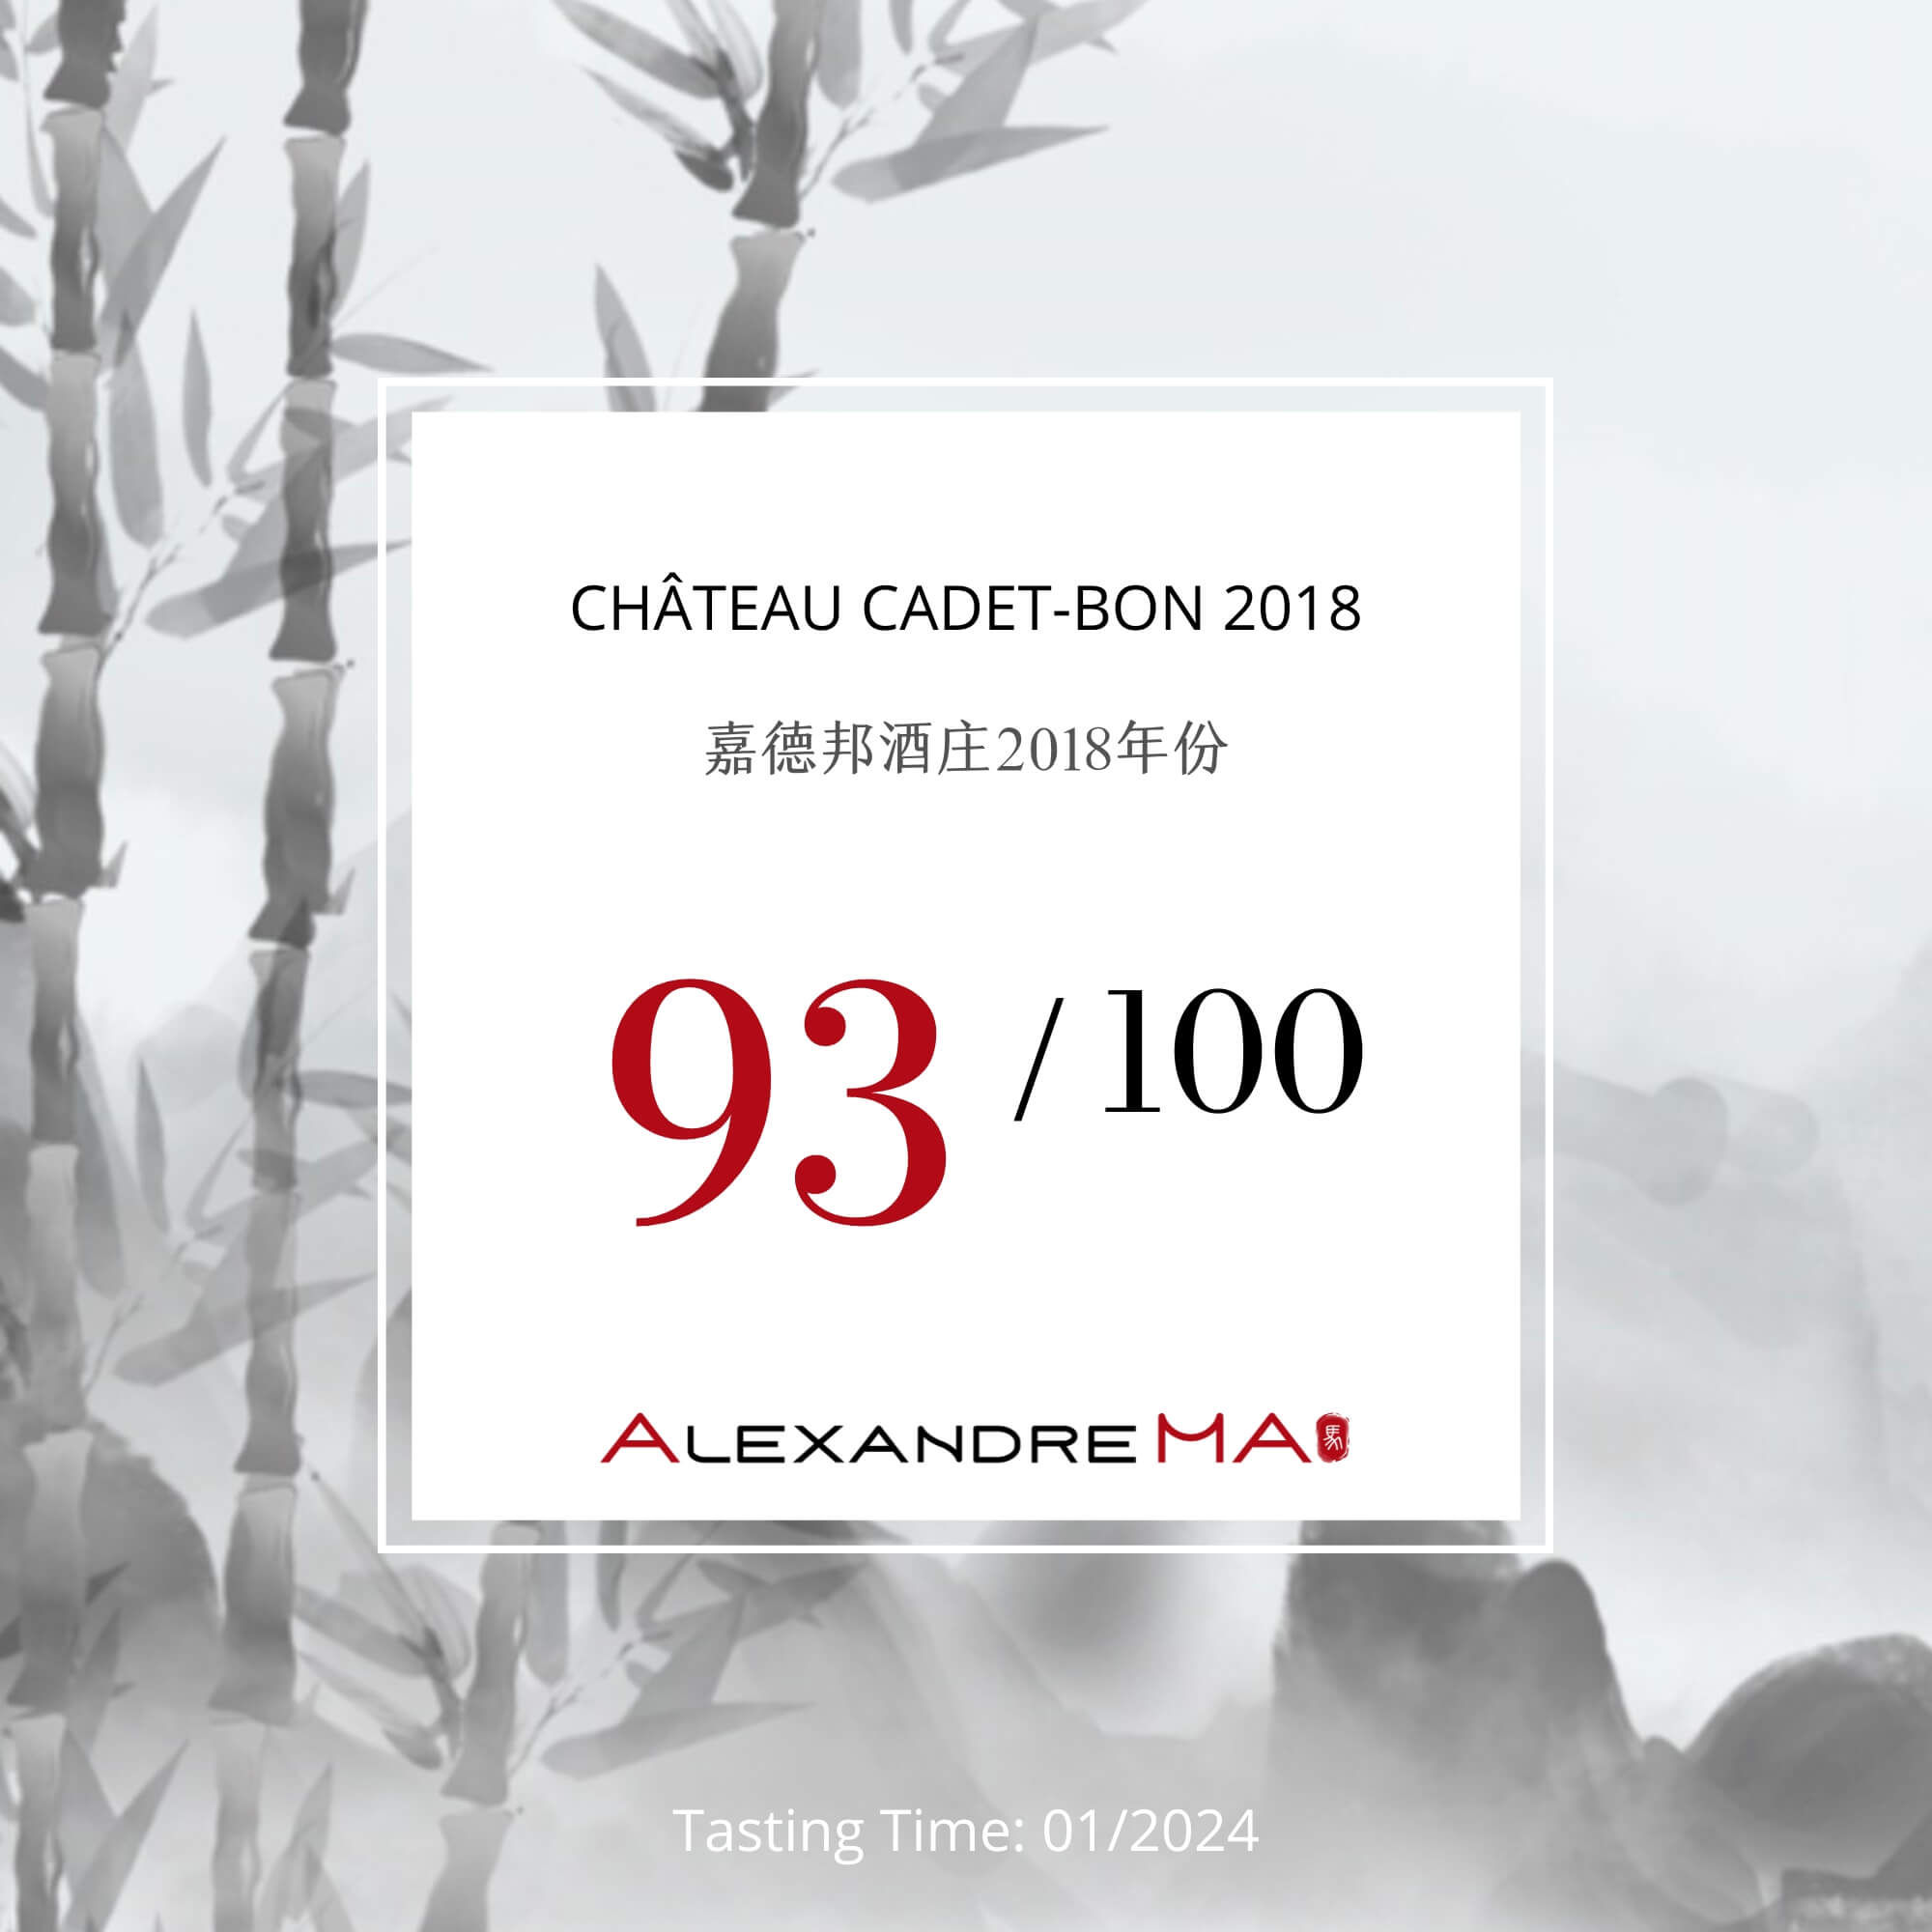 Château Cadet-Bon 2018 - Alexandre MA